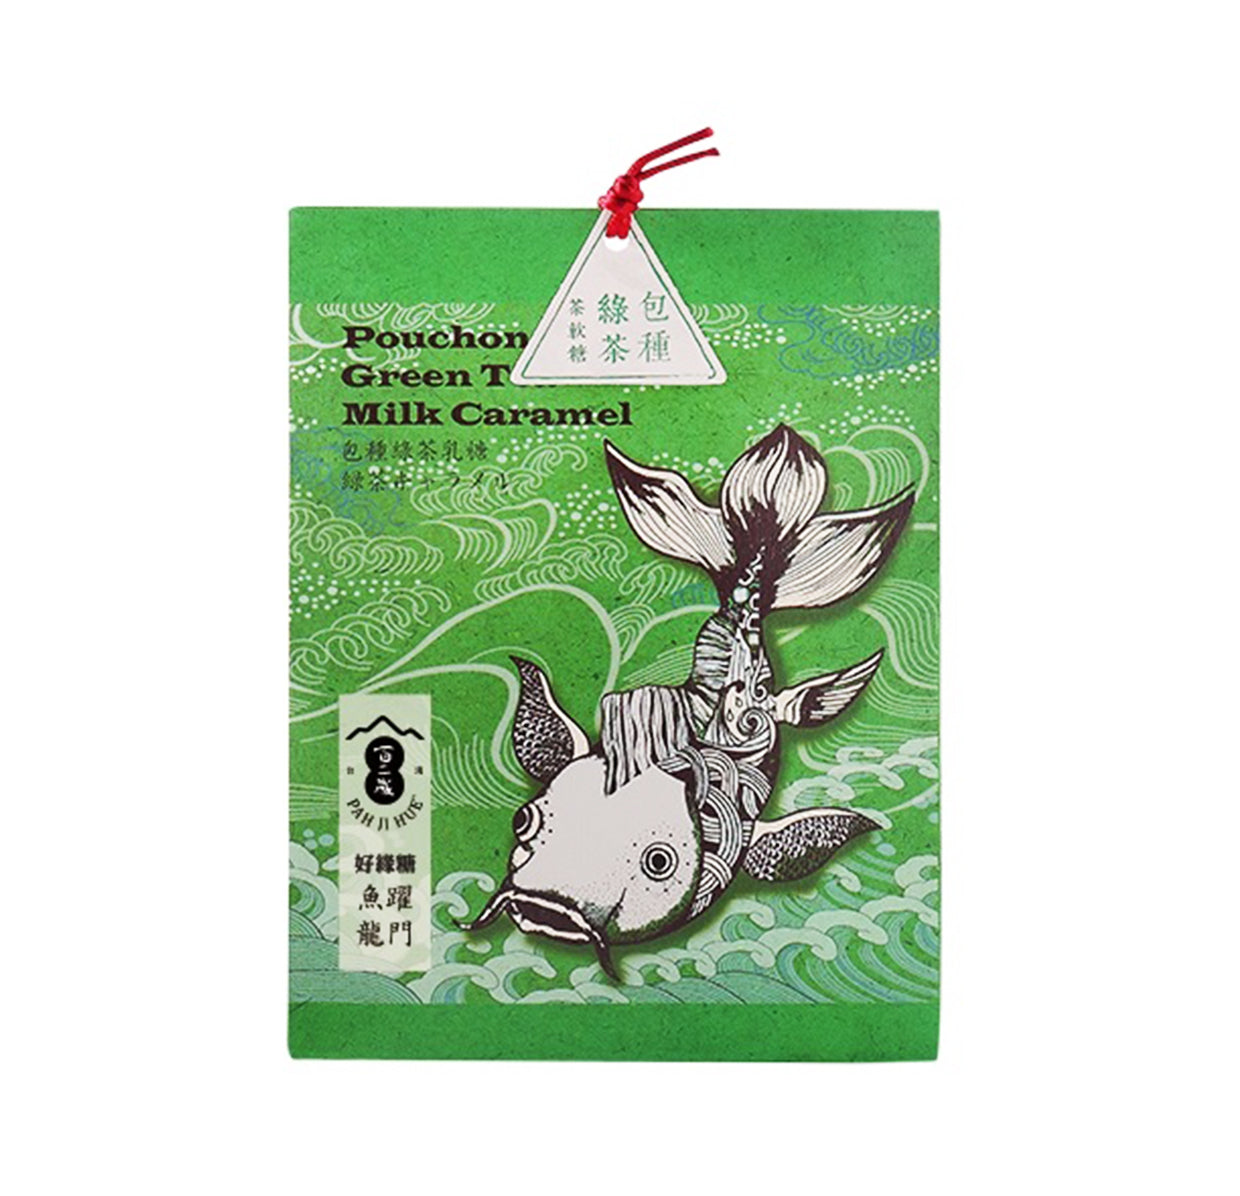 【EATEA120】 Pouchong Green Tea Milk Caramel 82g